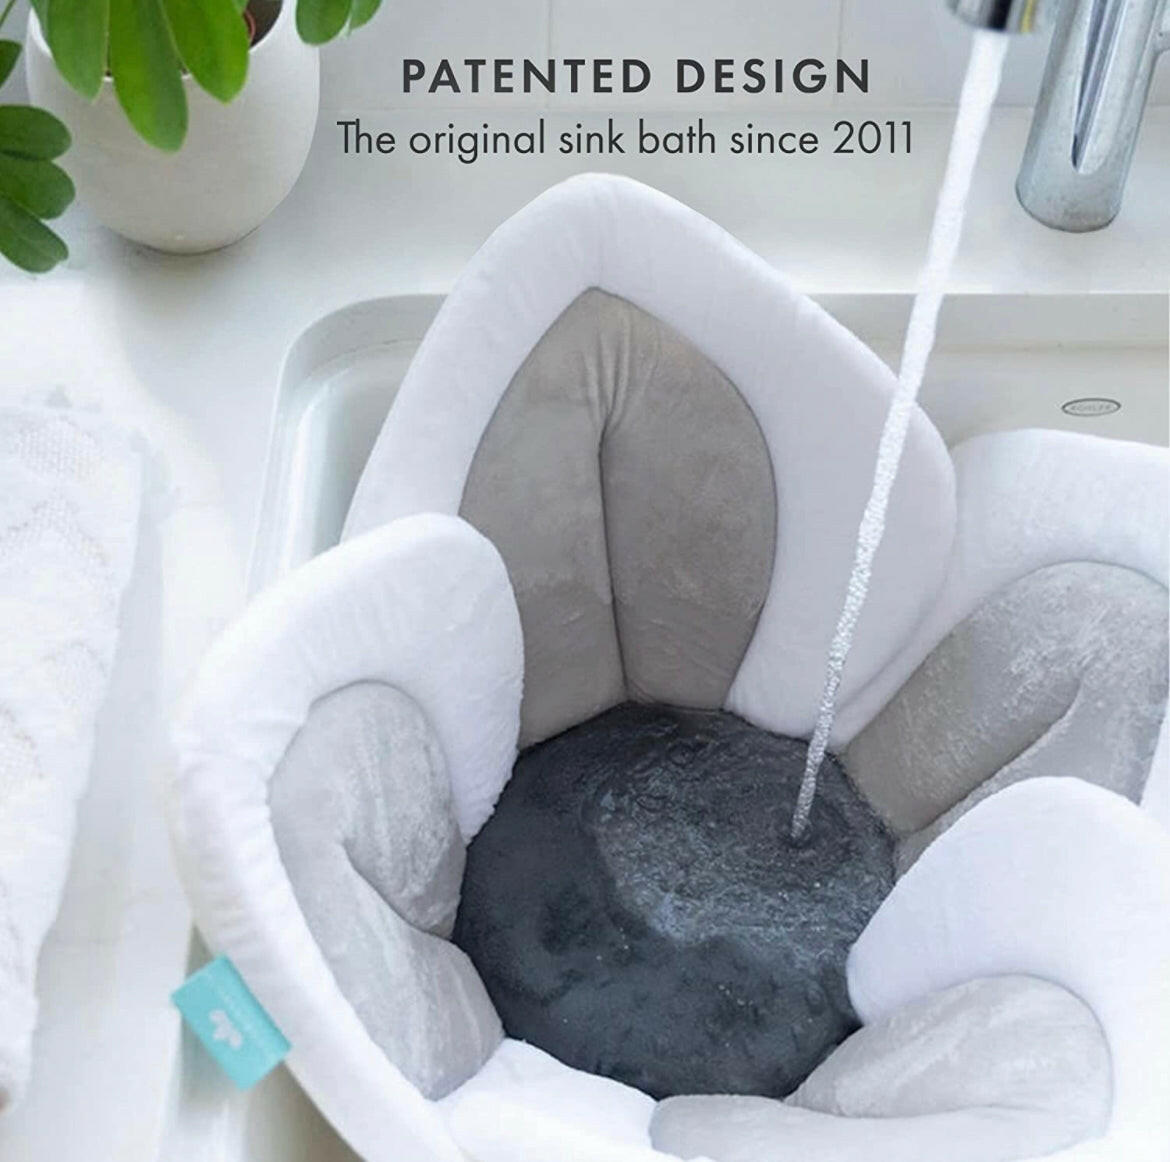 Blooming Bath Lotus - Baby Bath Seat for Sink - Premium Baby Bathtub - Newborn Bath Baby Essentials.